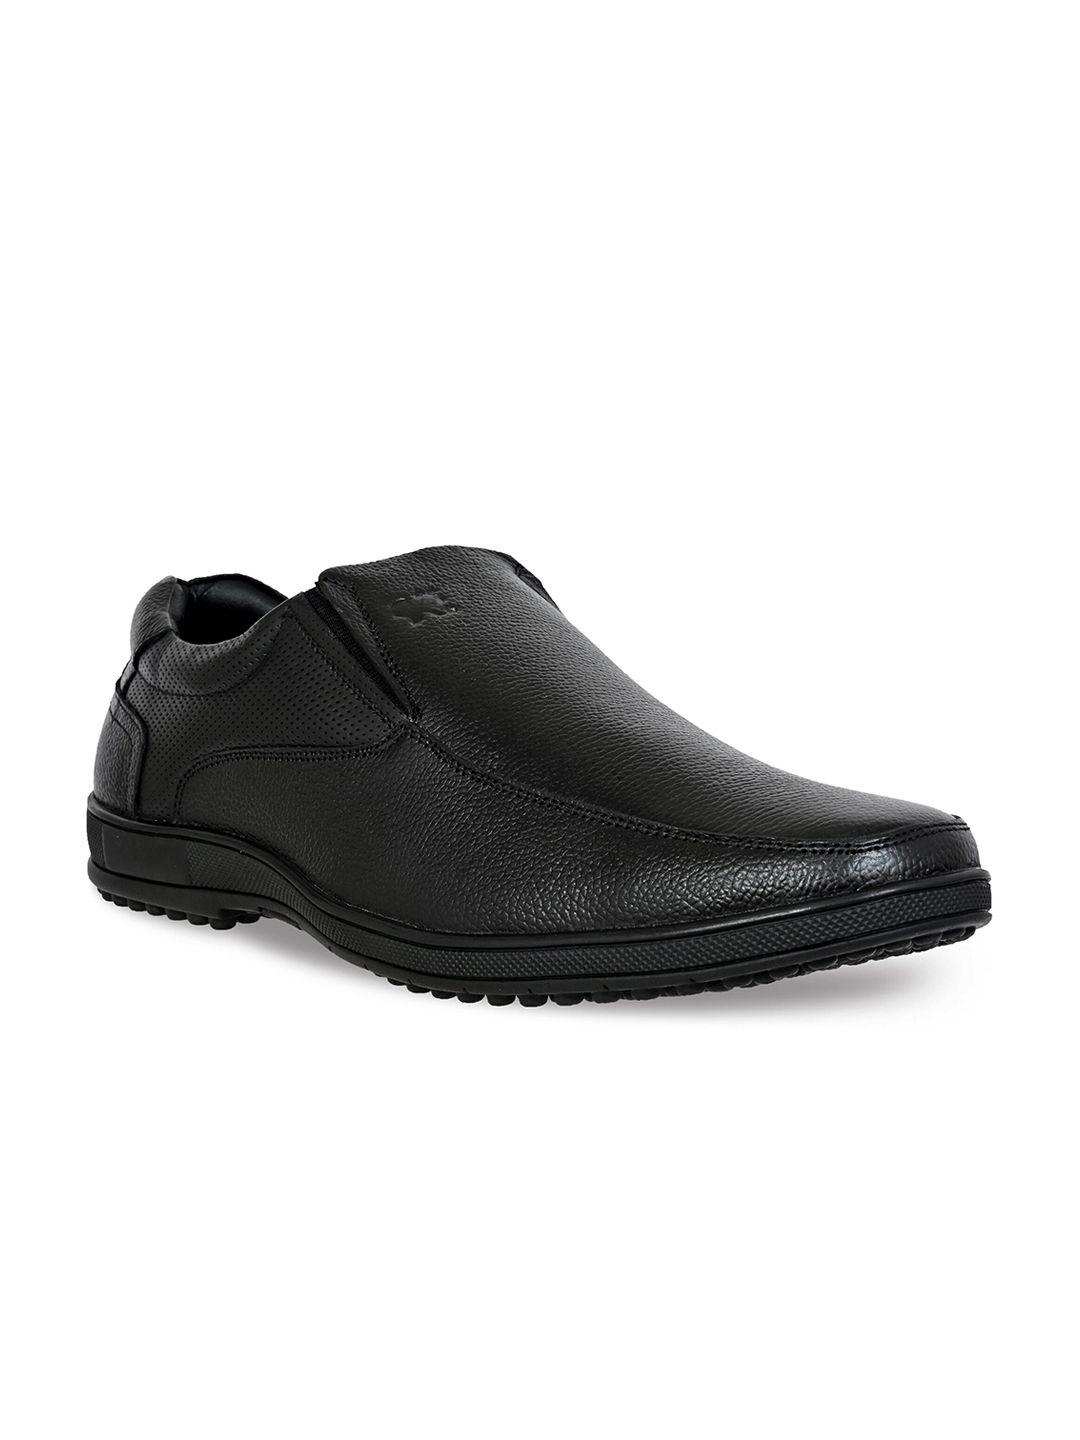 kicksfire men textured leather formal loafers